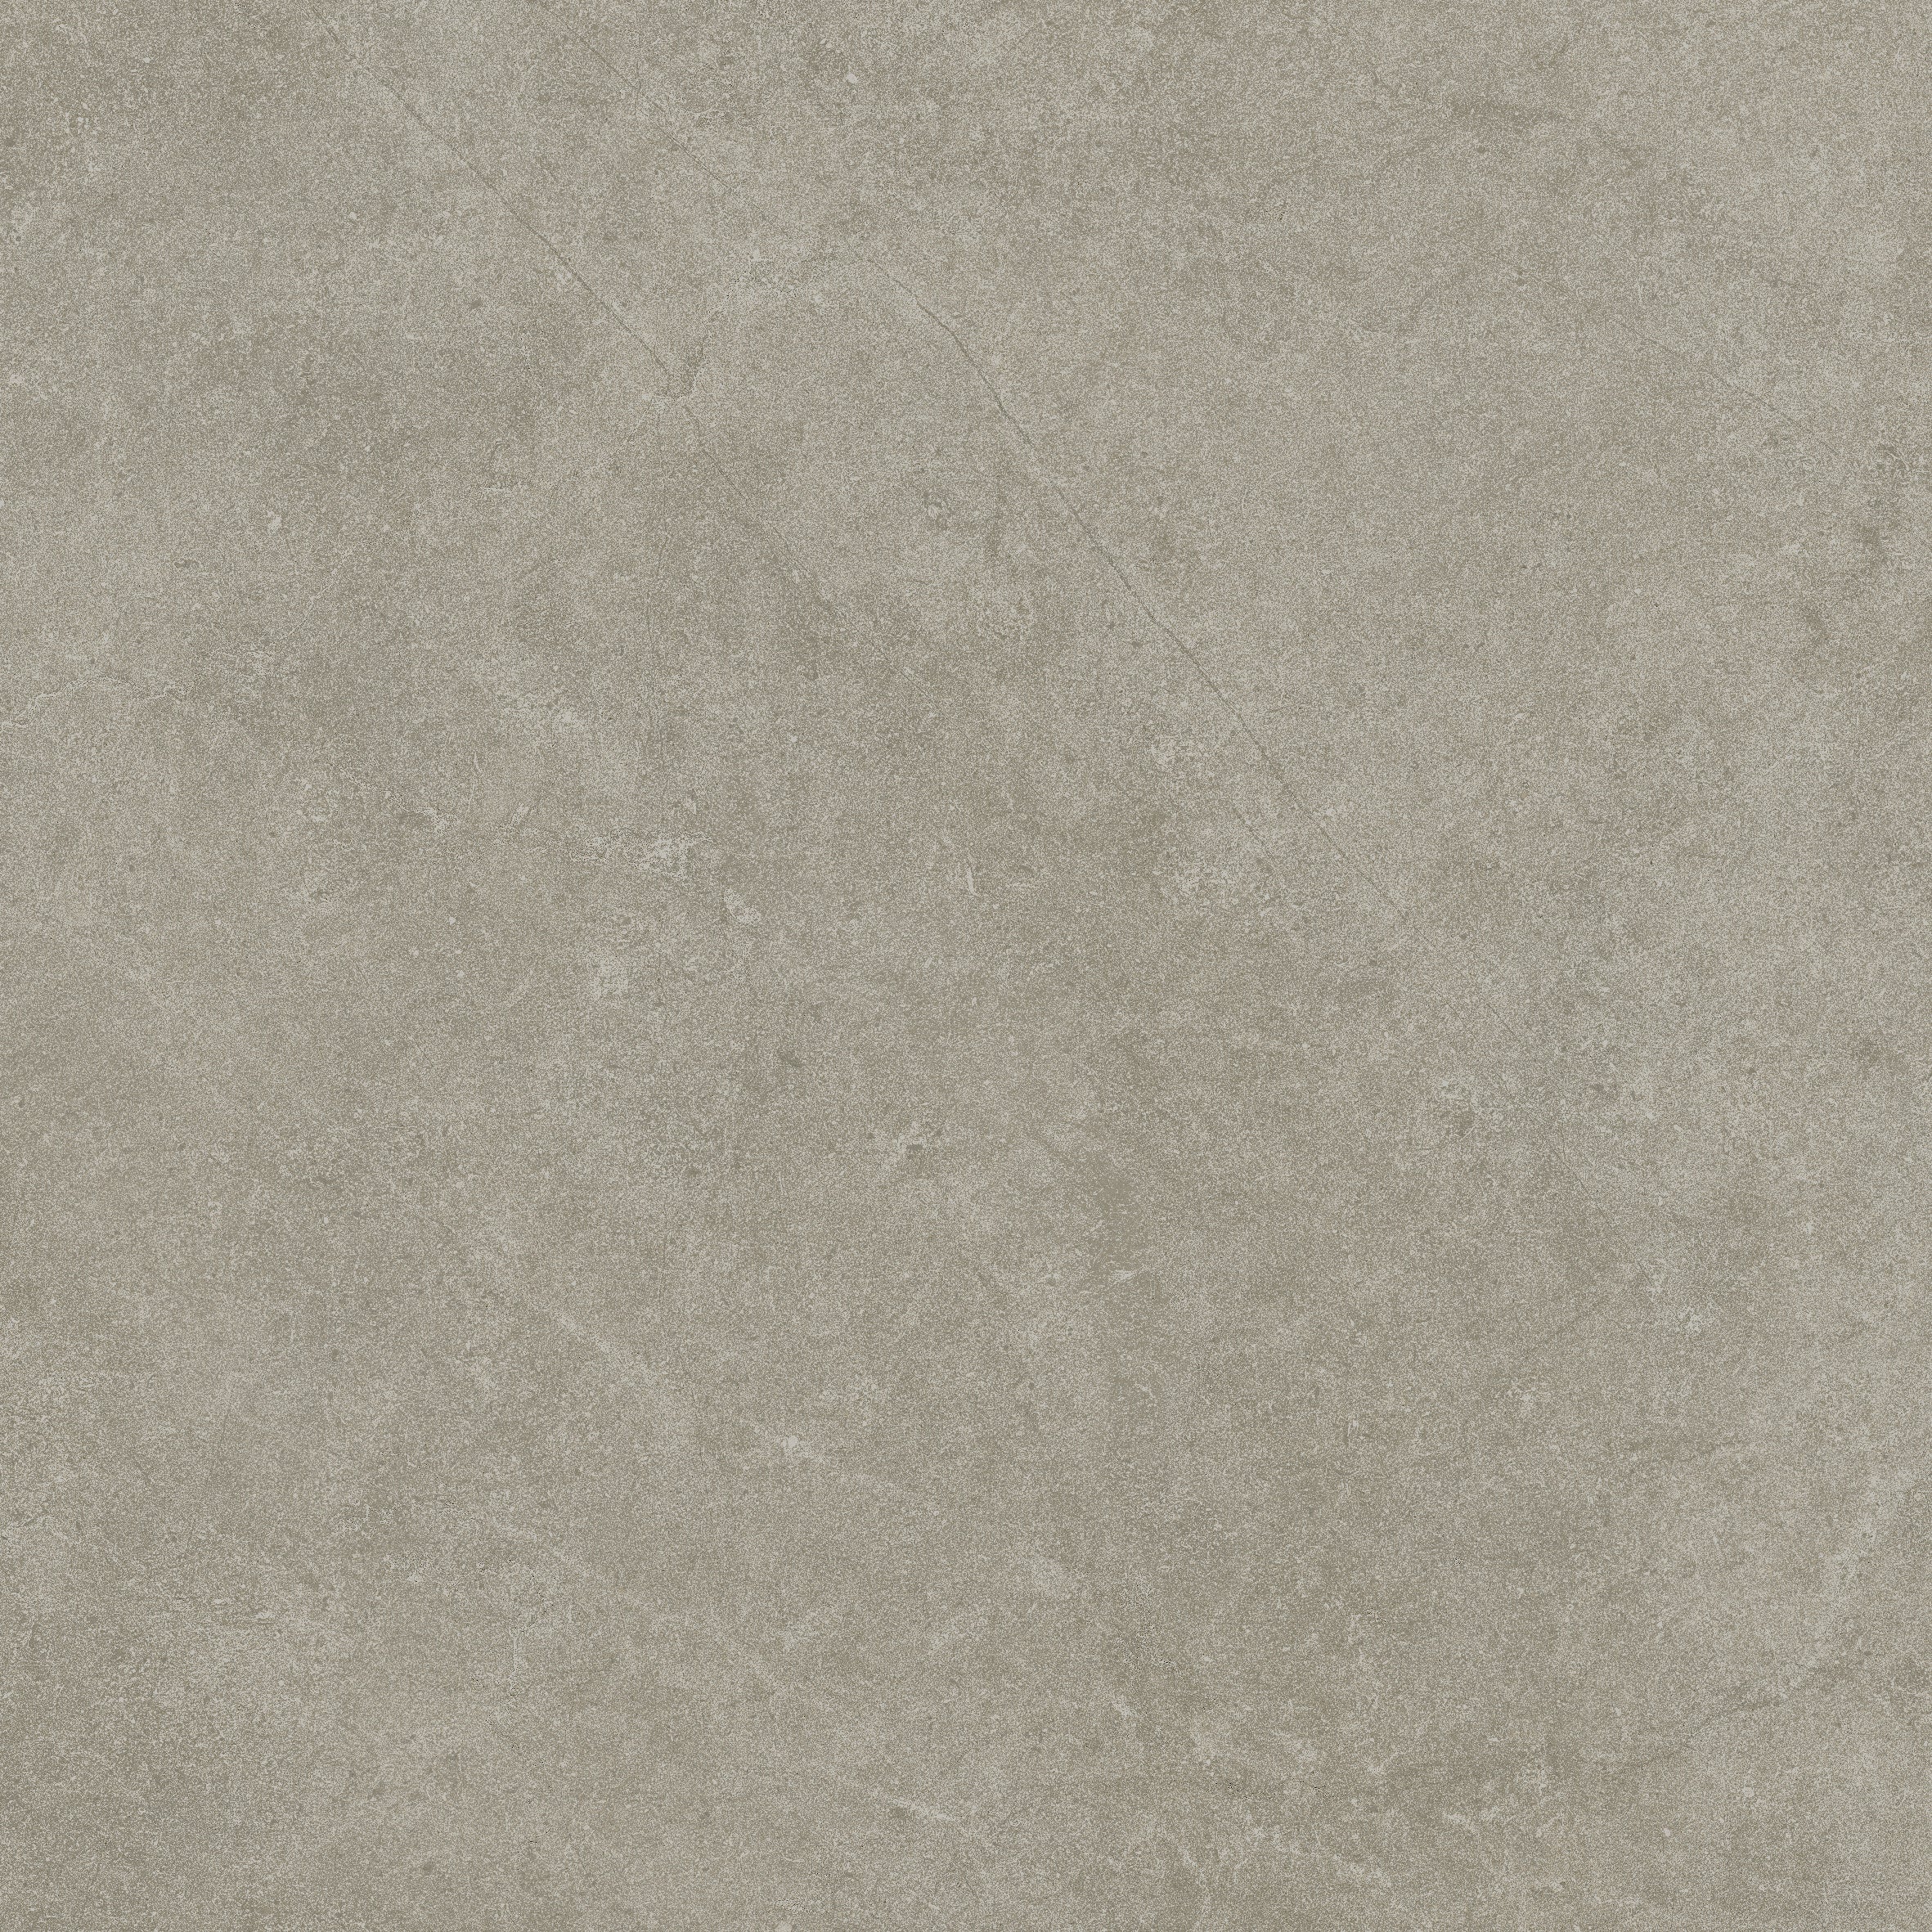 Ragno Realstone Argent - Ghiaccio – All The Shapes Tile & Co.